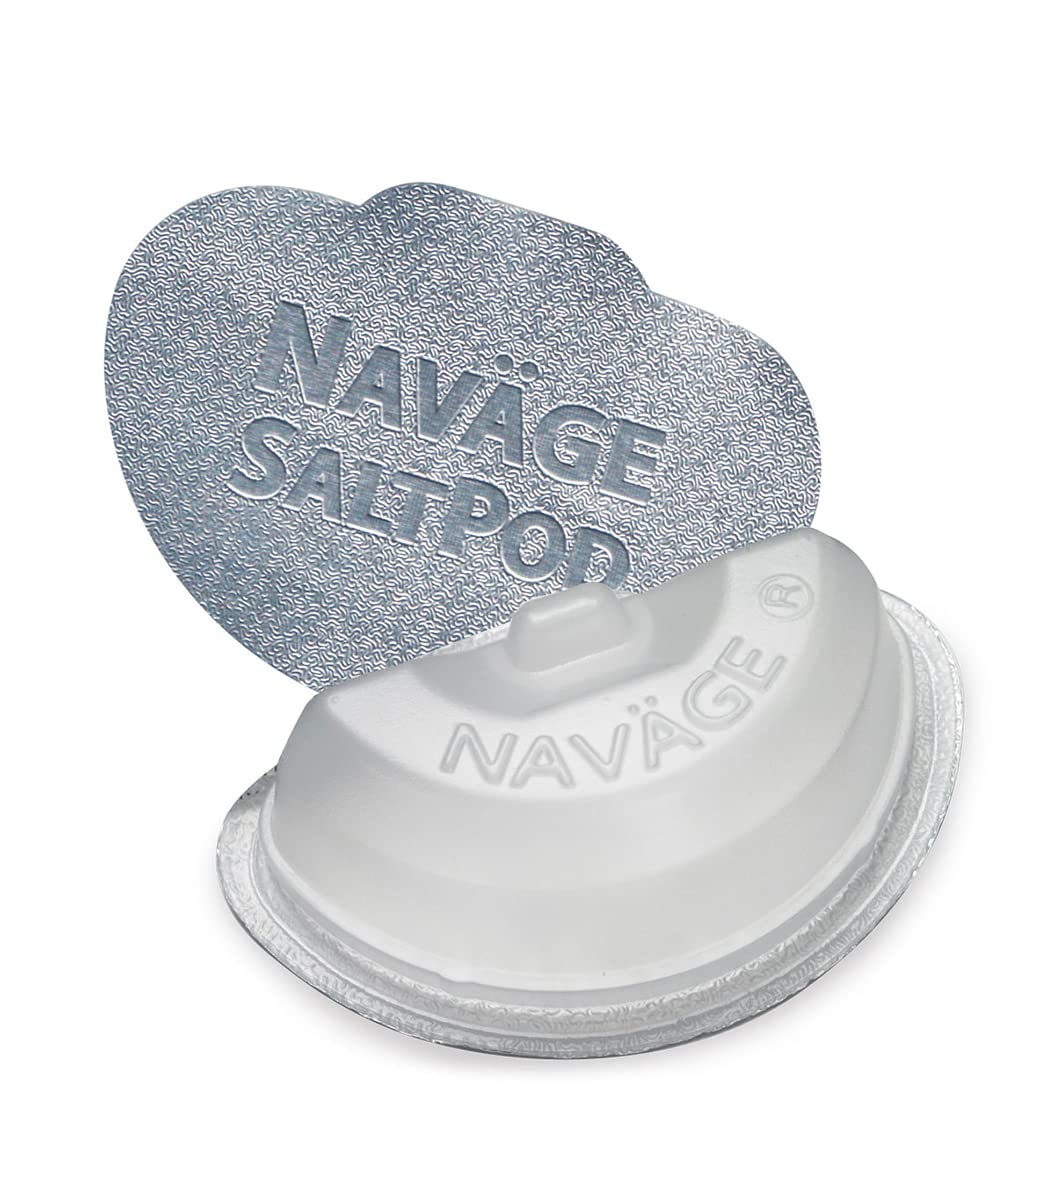 Navage SaltPod Bundle: 3 SaltPod 30-Packs (90 SaltPods) 44.85 if Purchased Separately